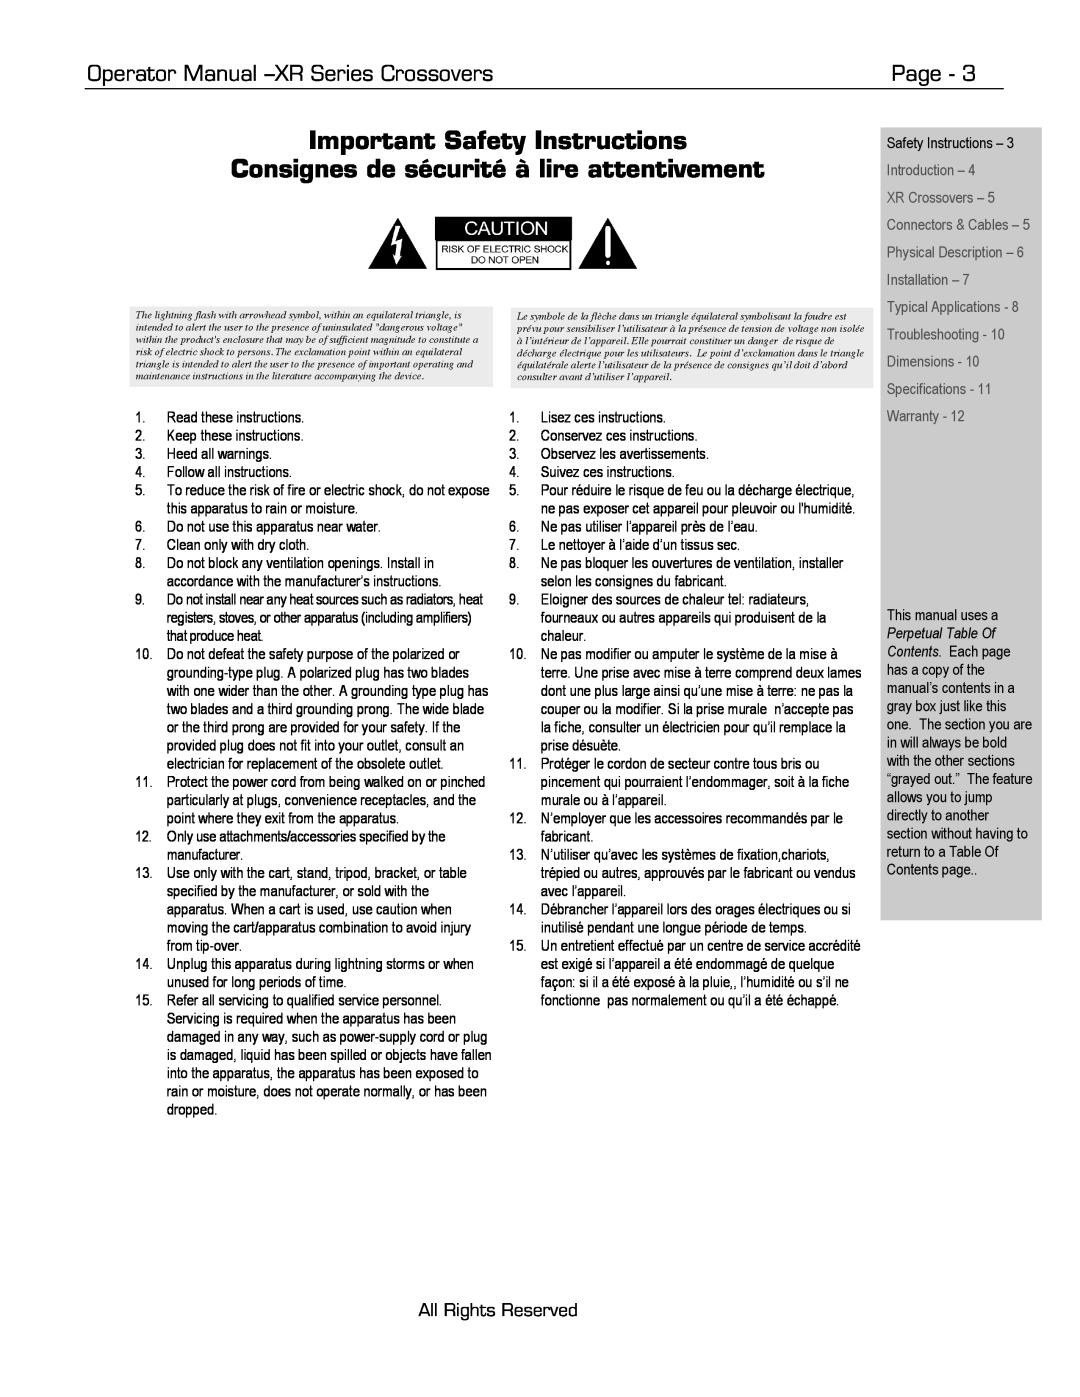 Ashly XR-2001 manual Important Safety Instructions, Consignes de sécurité à lire attentivement, Page, All Rights Reserved 